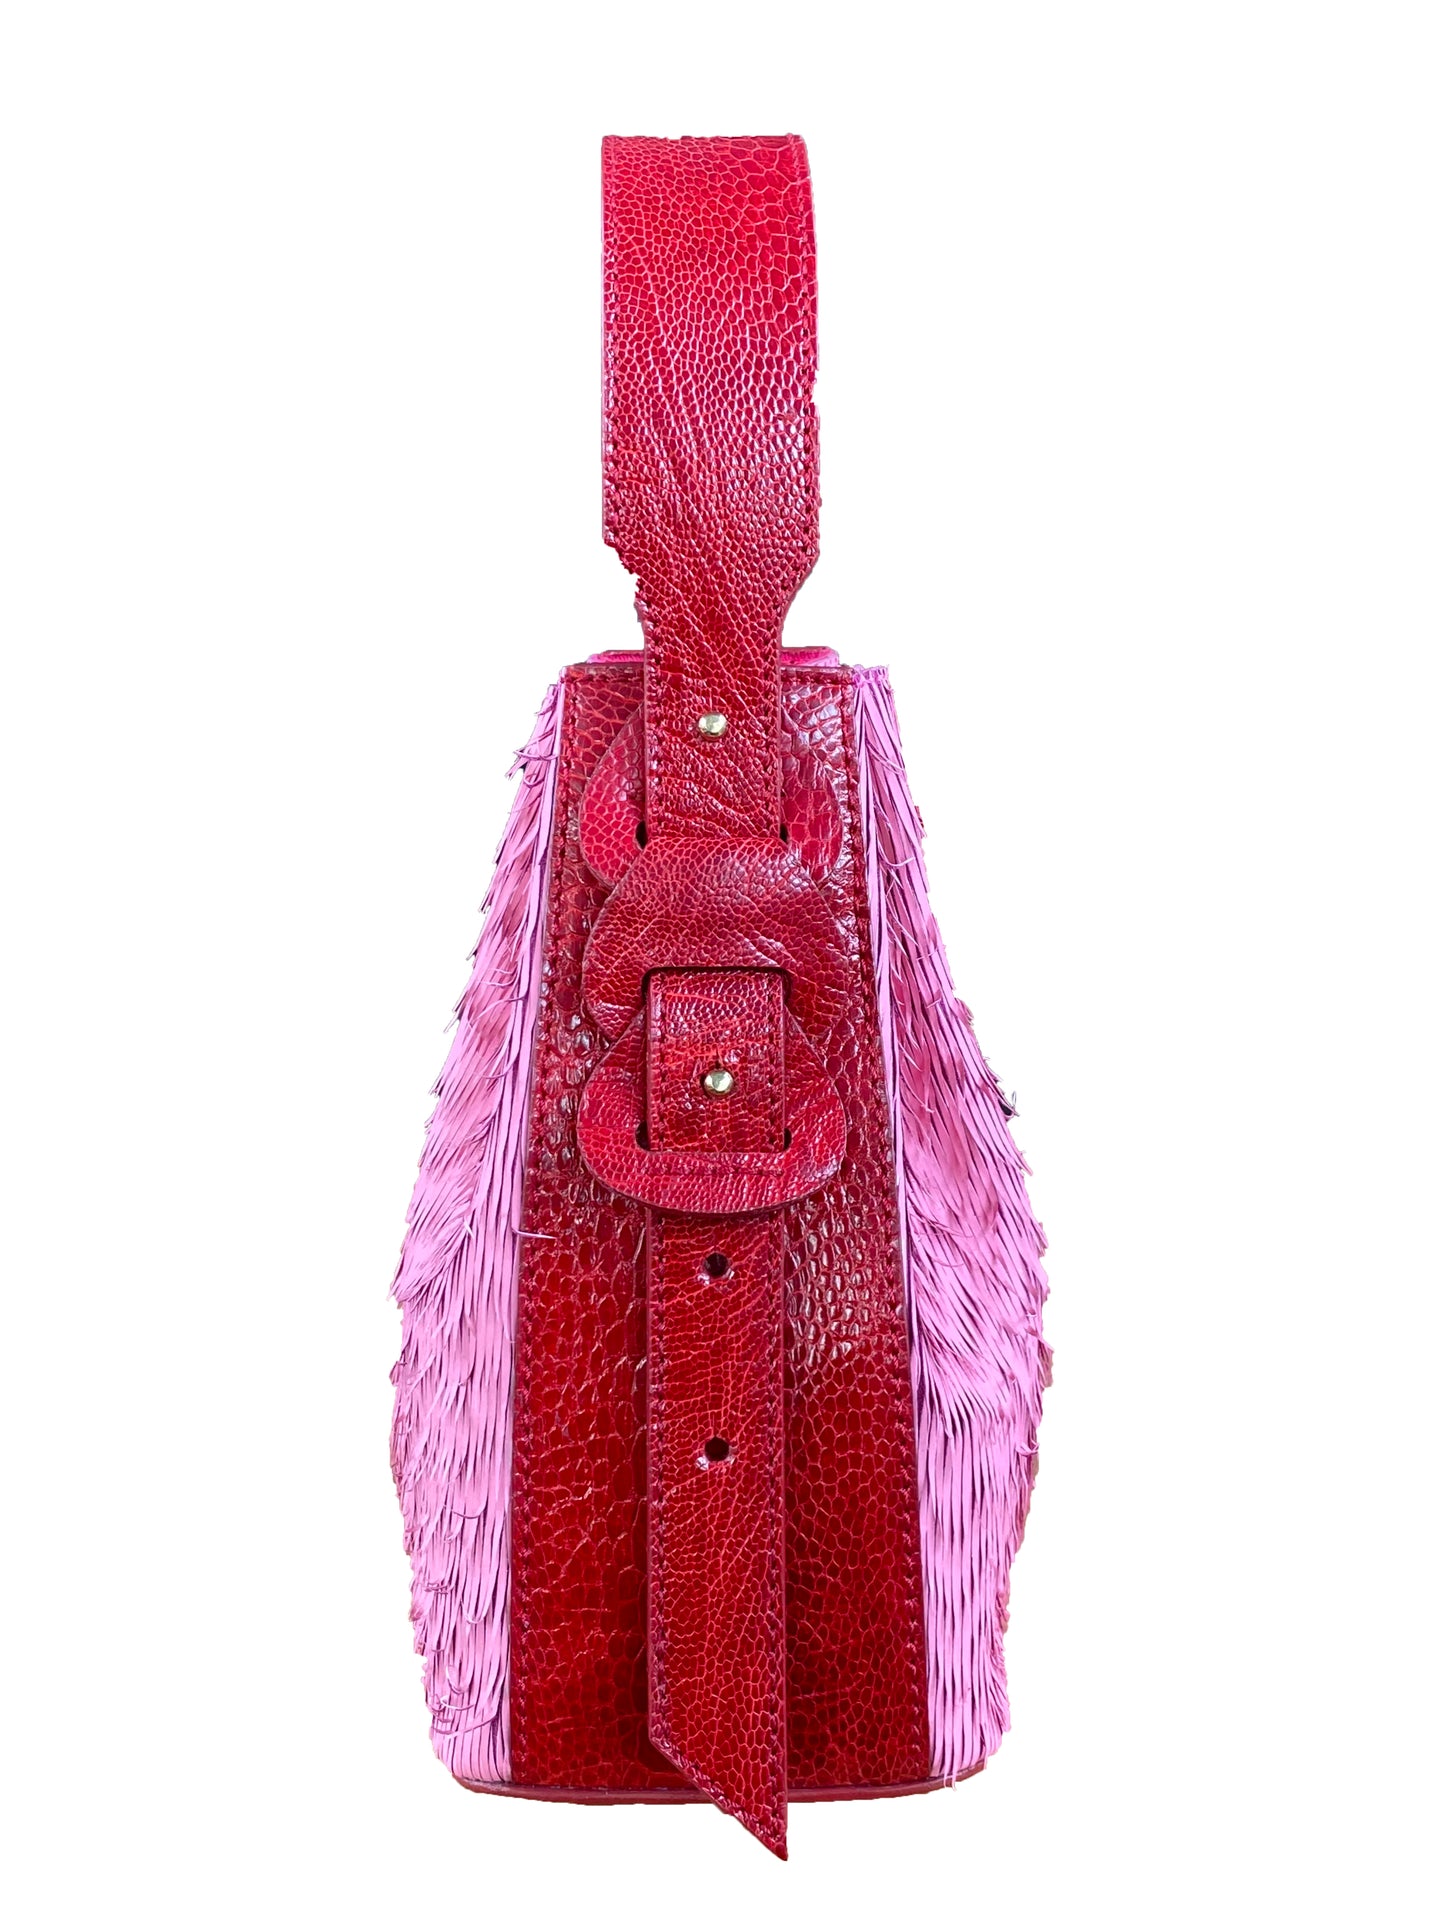 Artisanal 'Trixie' Drawstring bag in Deadstock Leather